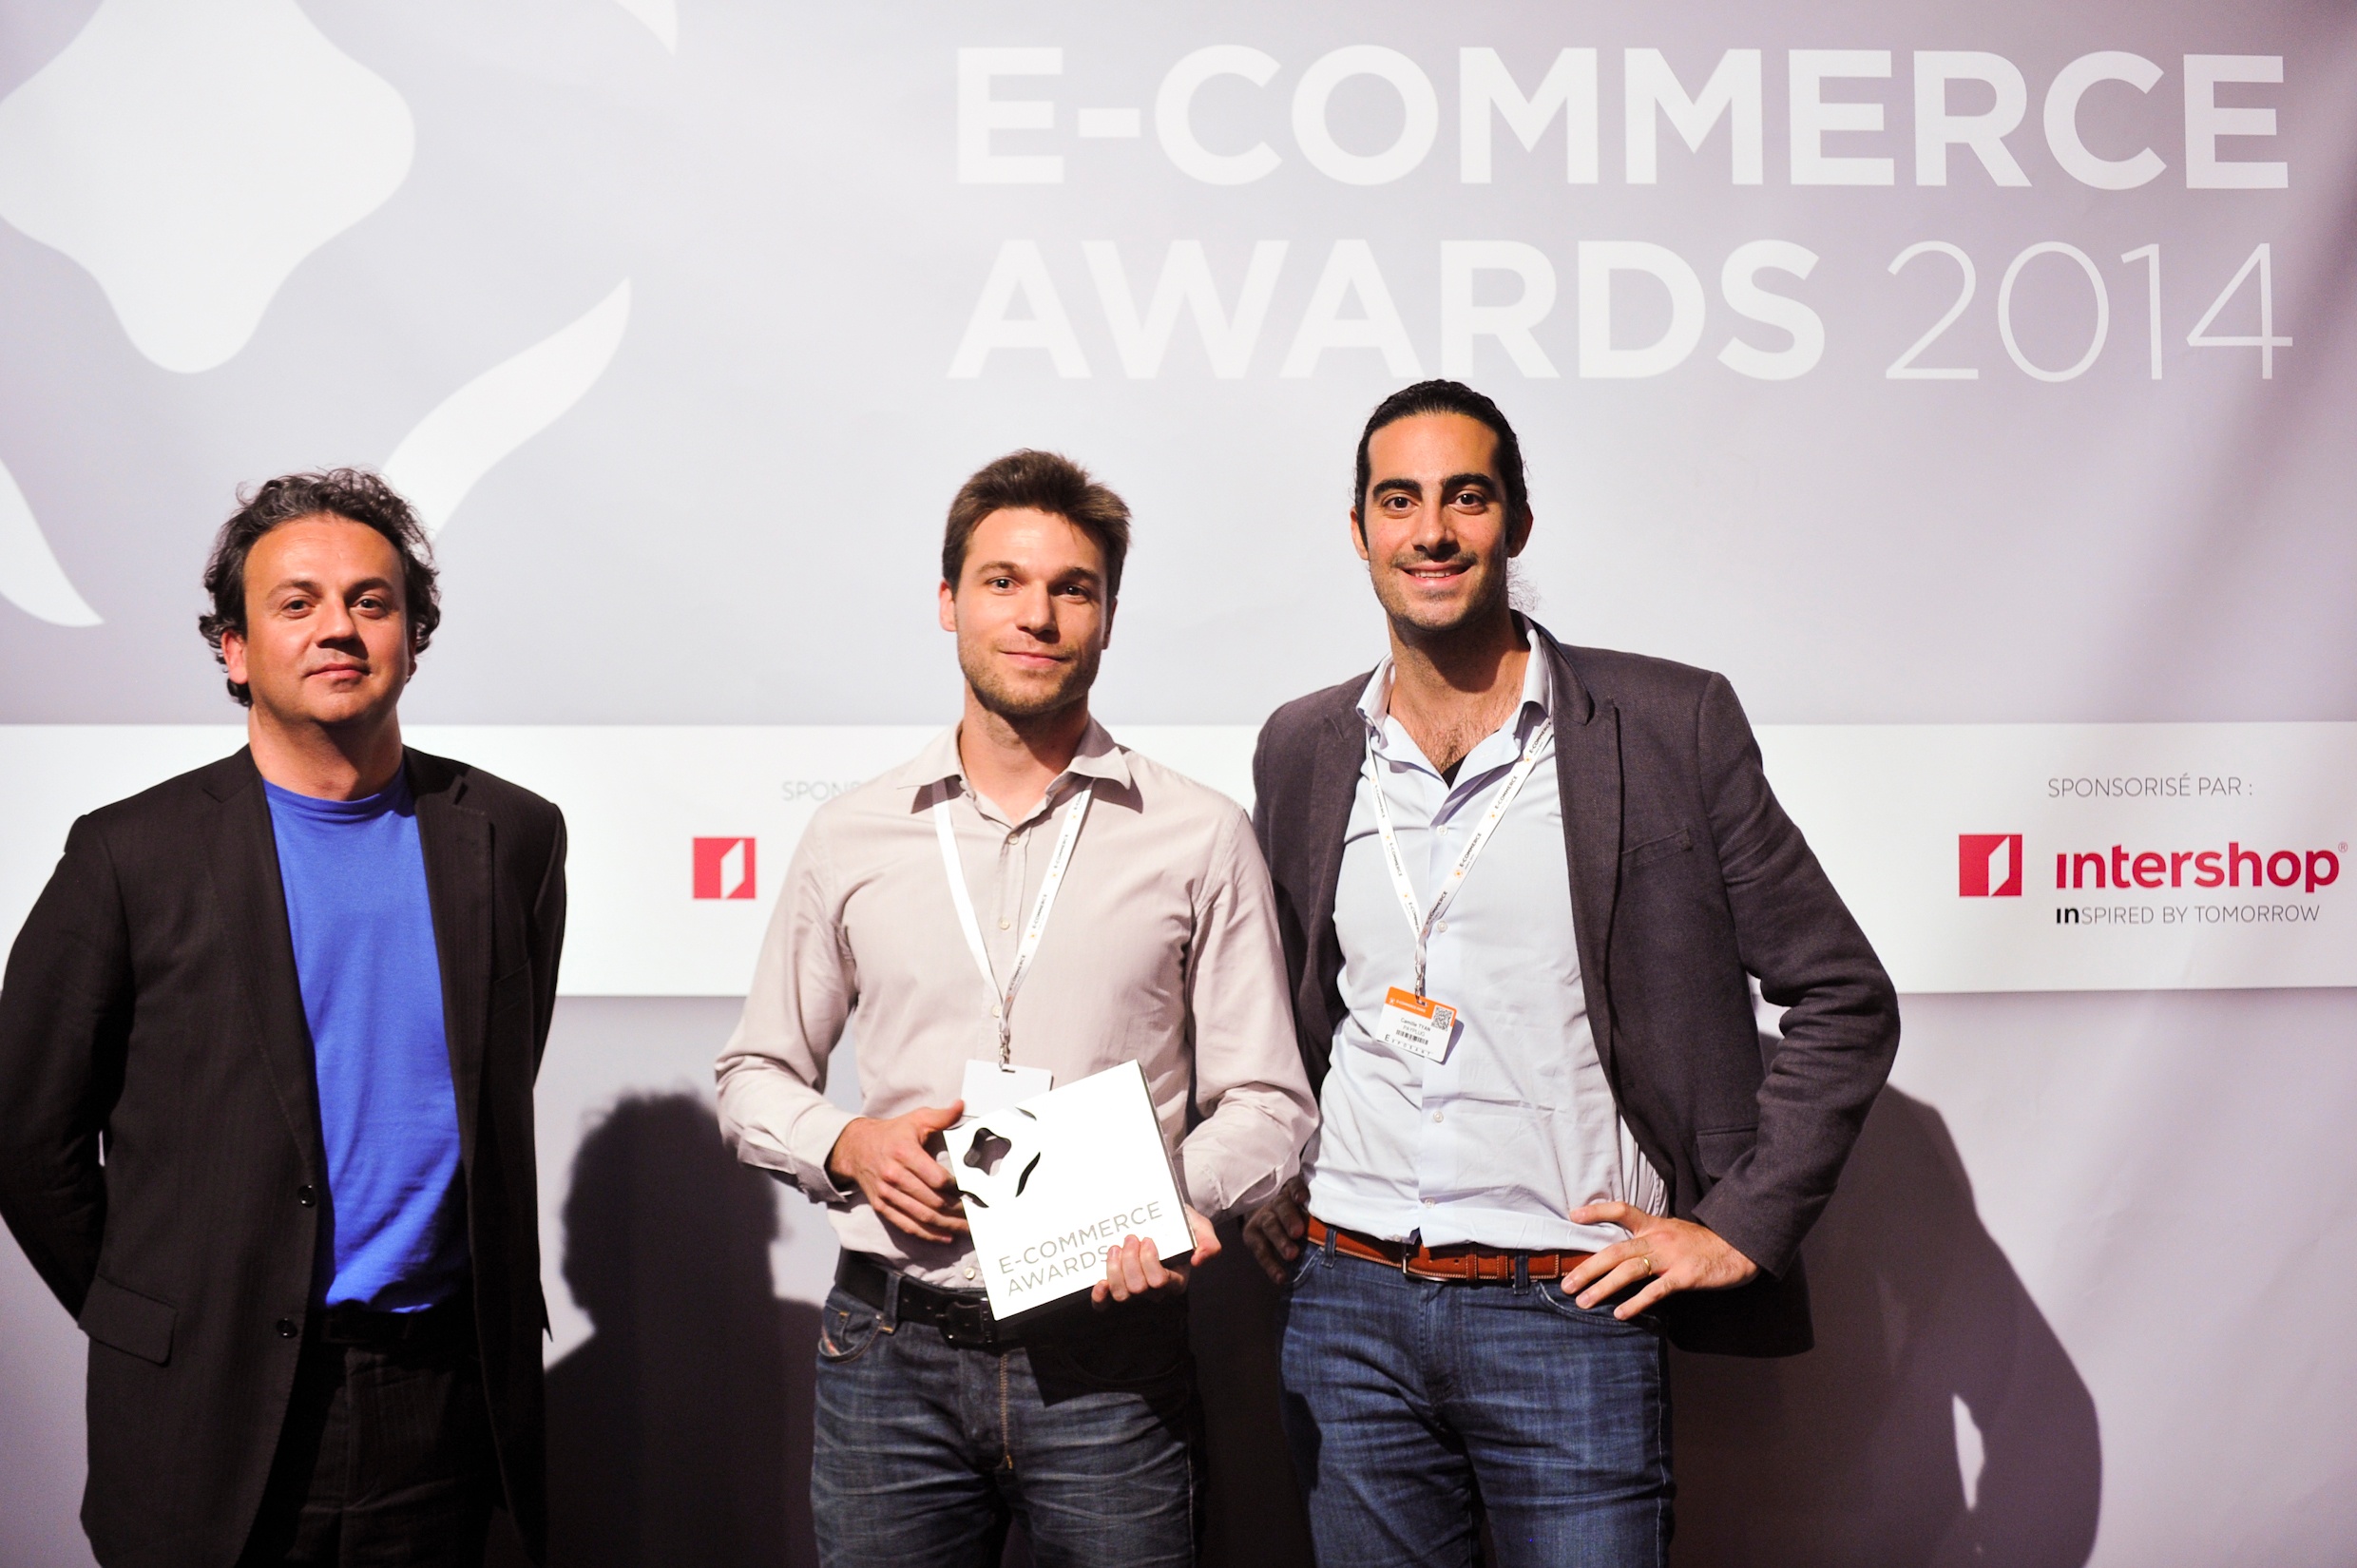 Playplug e-commerce Awards 2014